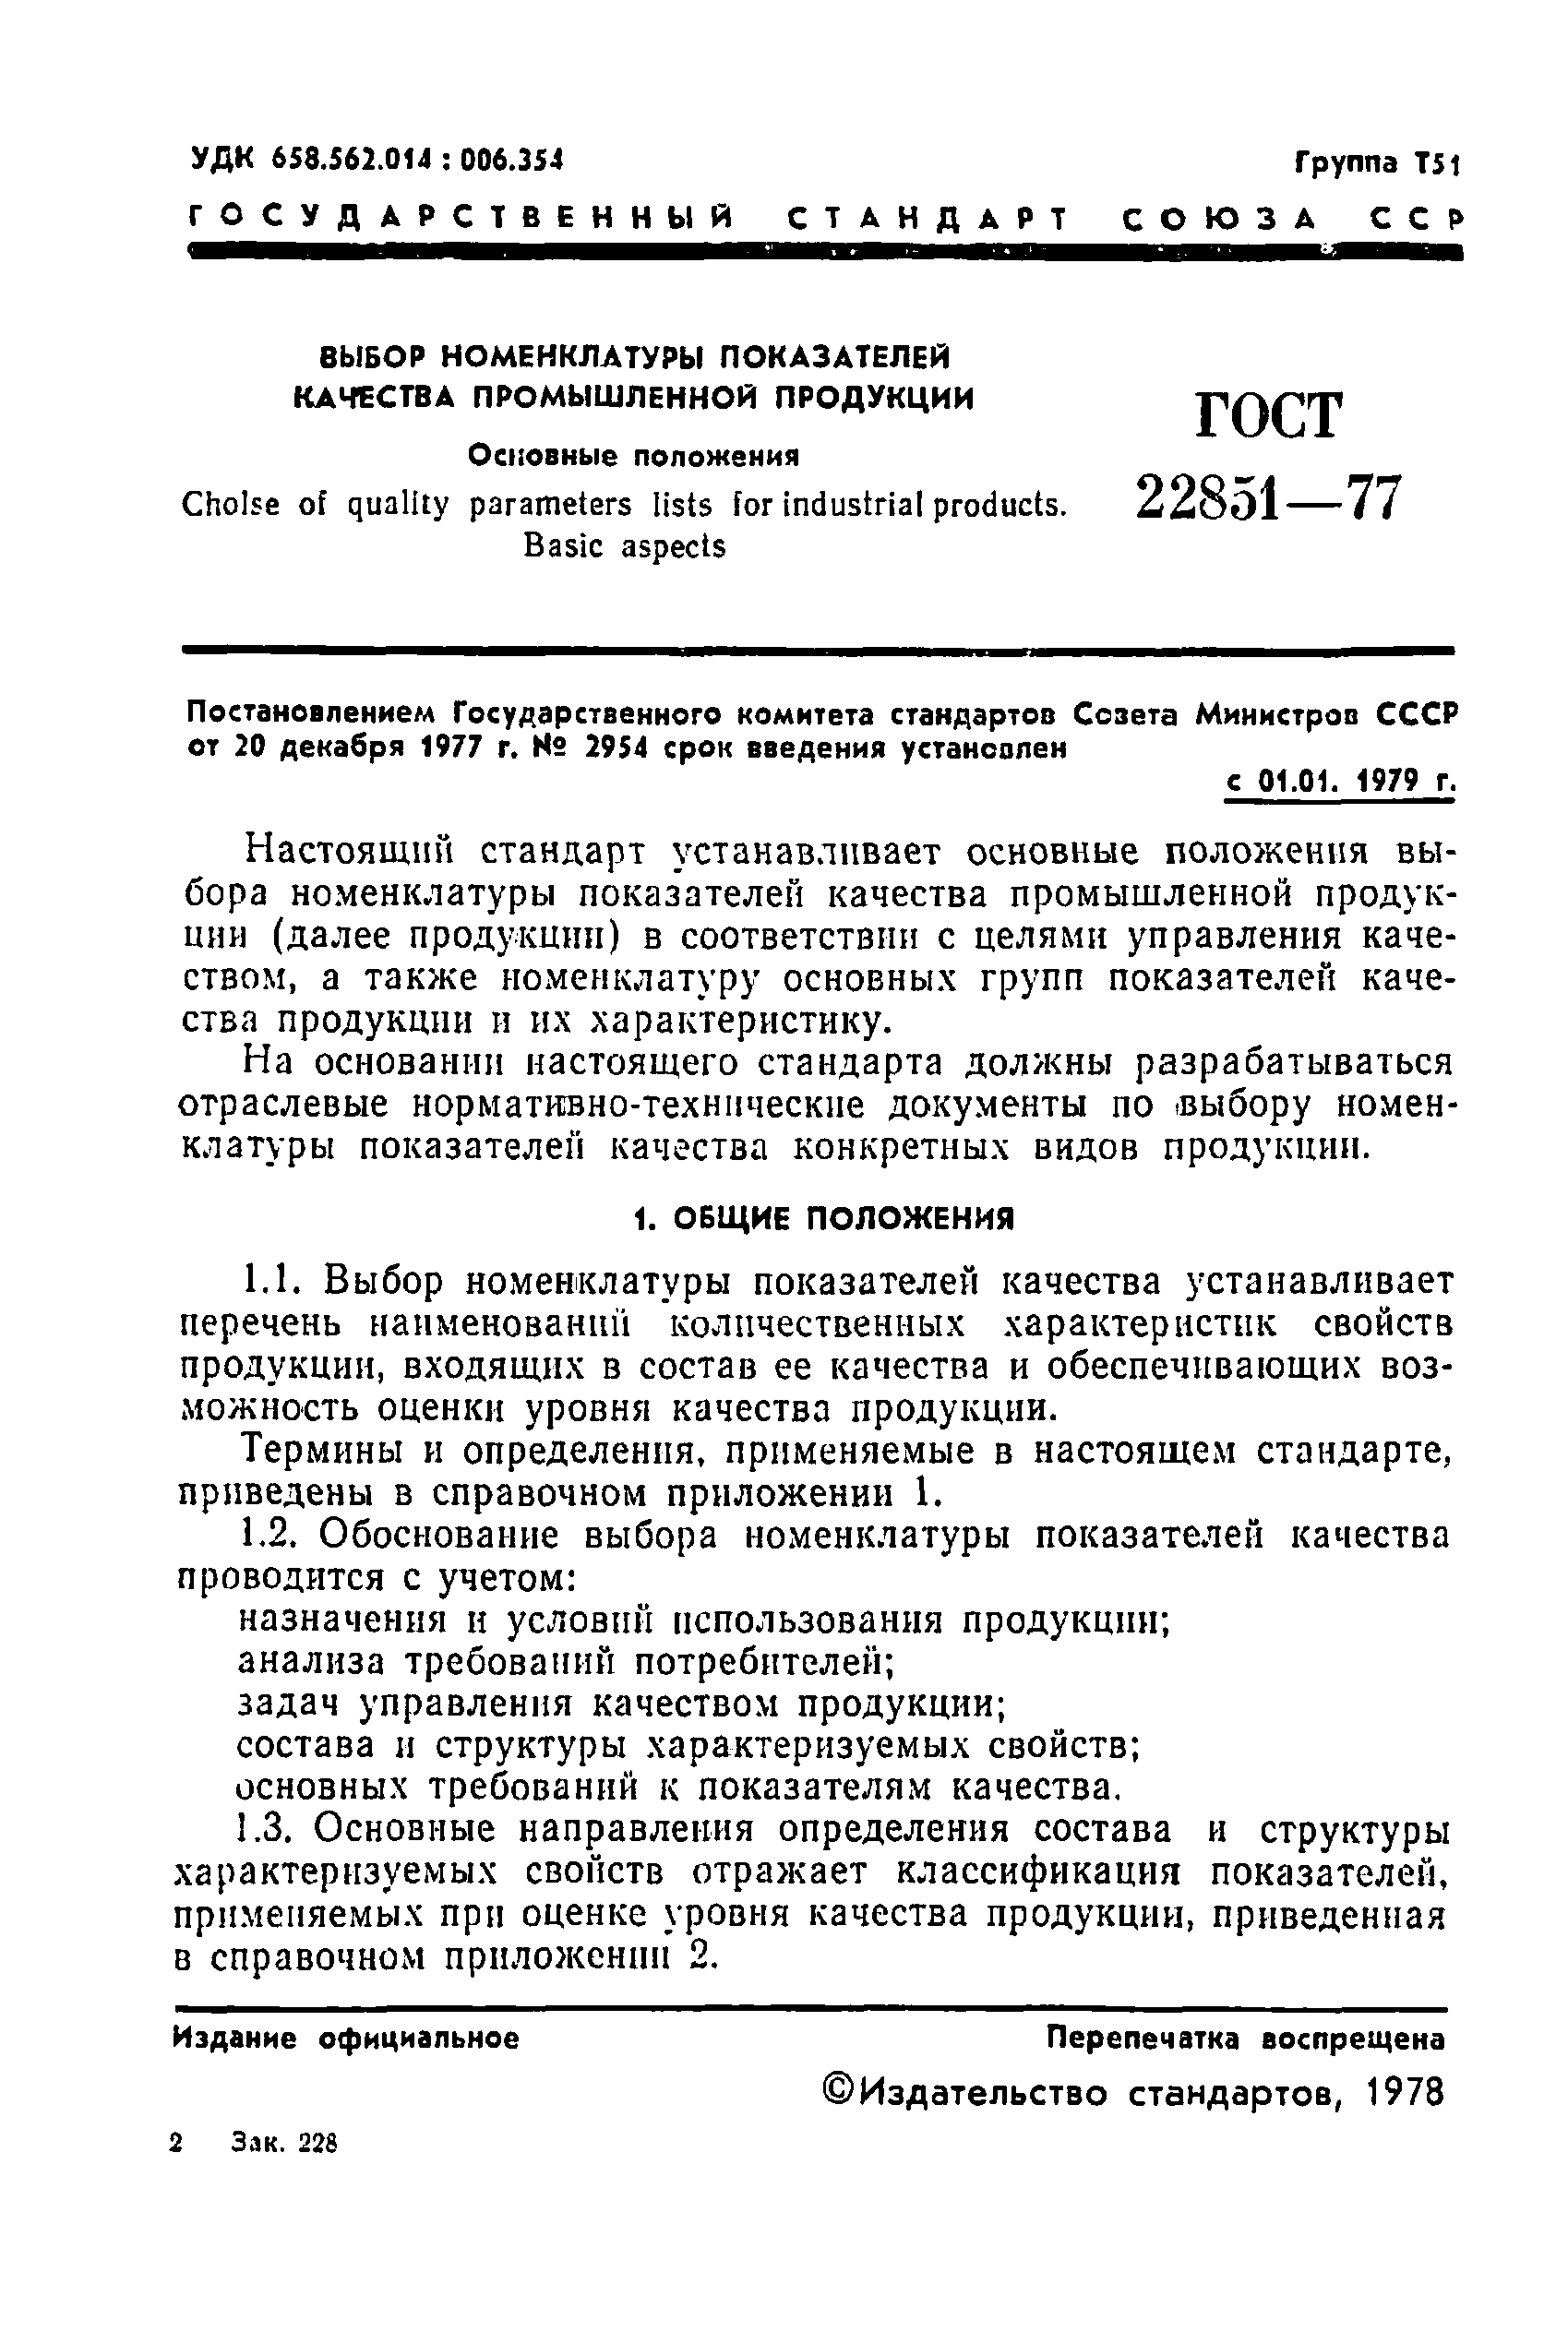 ГОСТ 22851-77